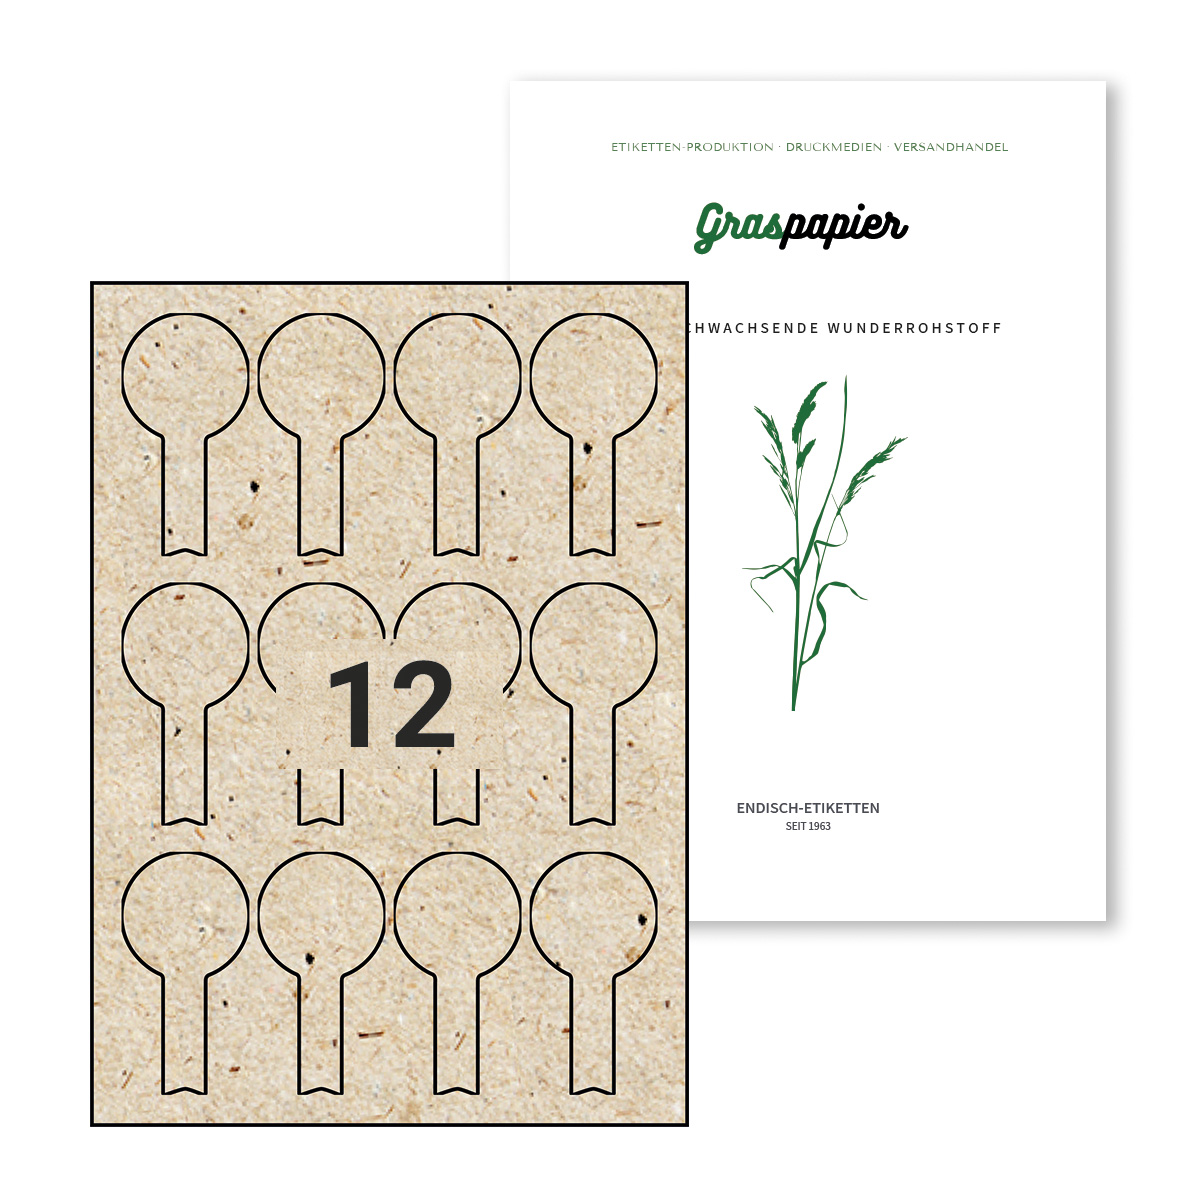 Frischesiegel Graspapier-Etiketten, 45x40/15 mm, 120 Etiketten, 10 Blatt DIN A4 / Pack